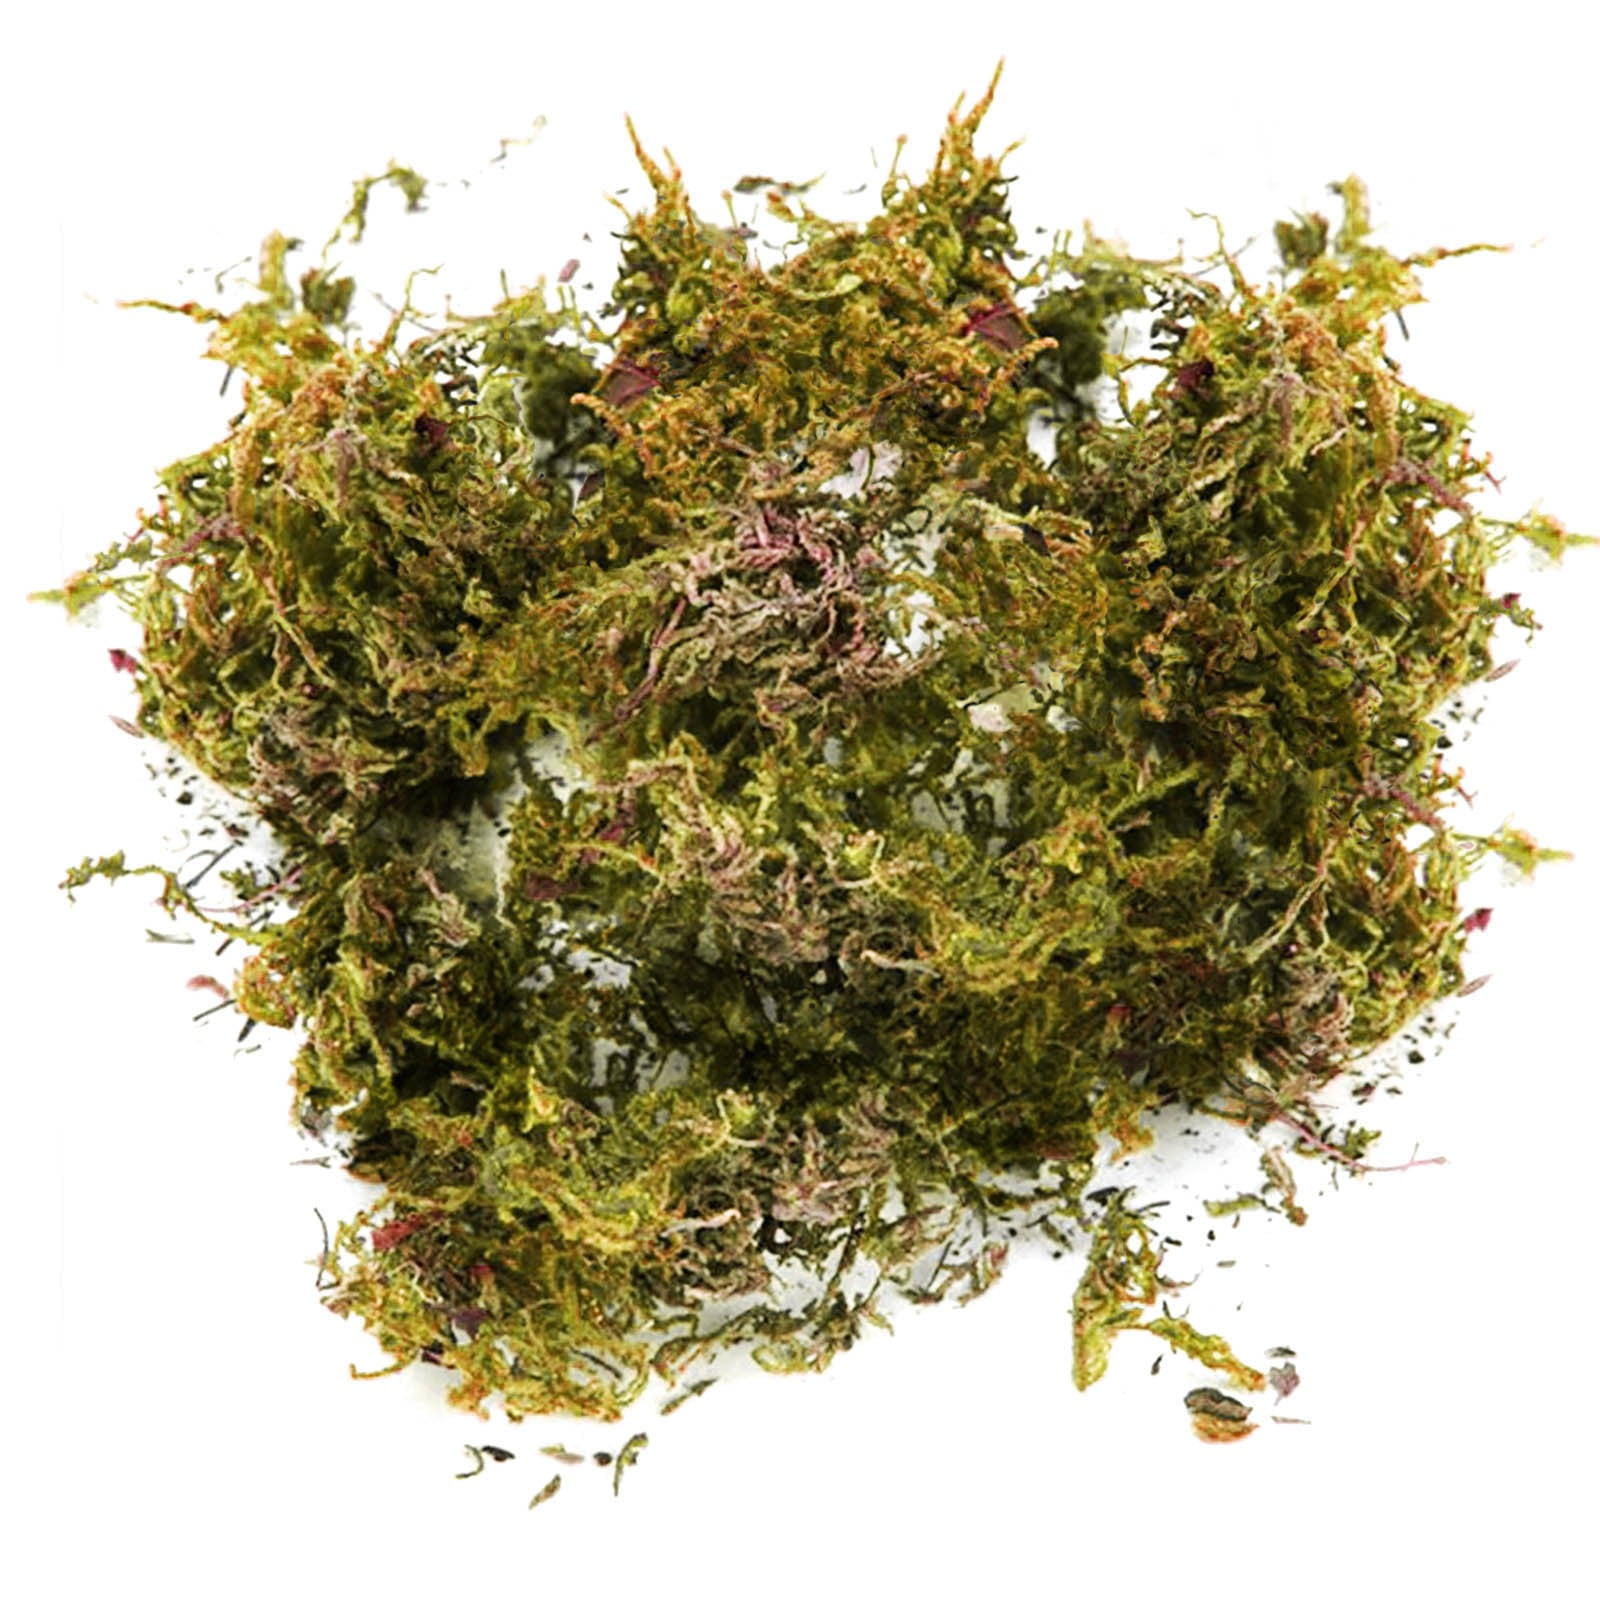 Great Choice Products Fake Moss, Artificial Fresh Green Moss for Wedding Centerpieces Garden Terrariums Decoration (8oz)